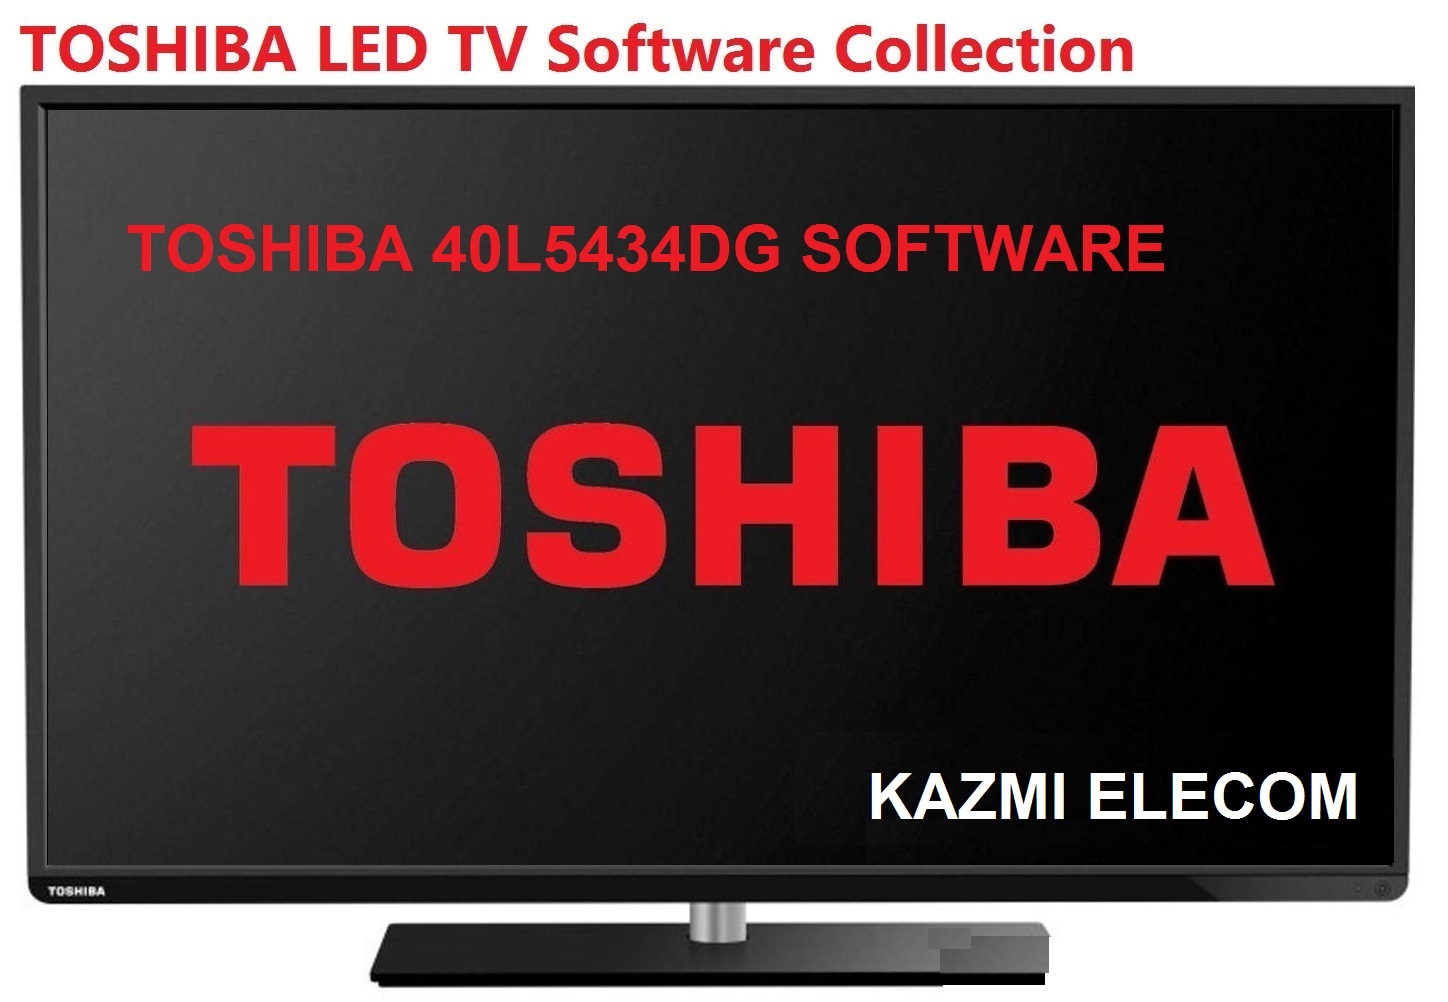 Toshiba 40L5434Dg